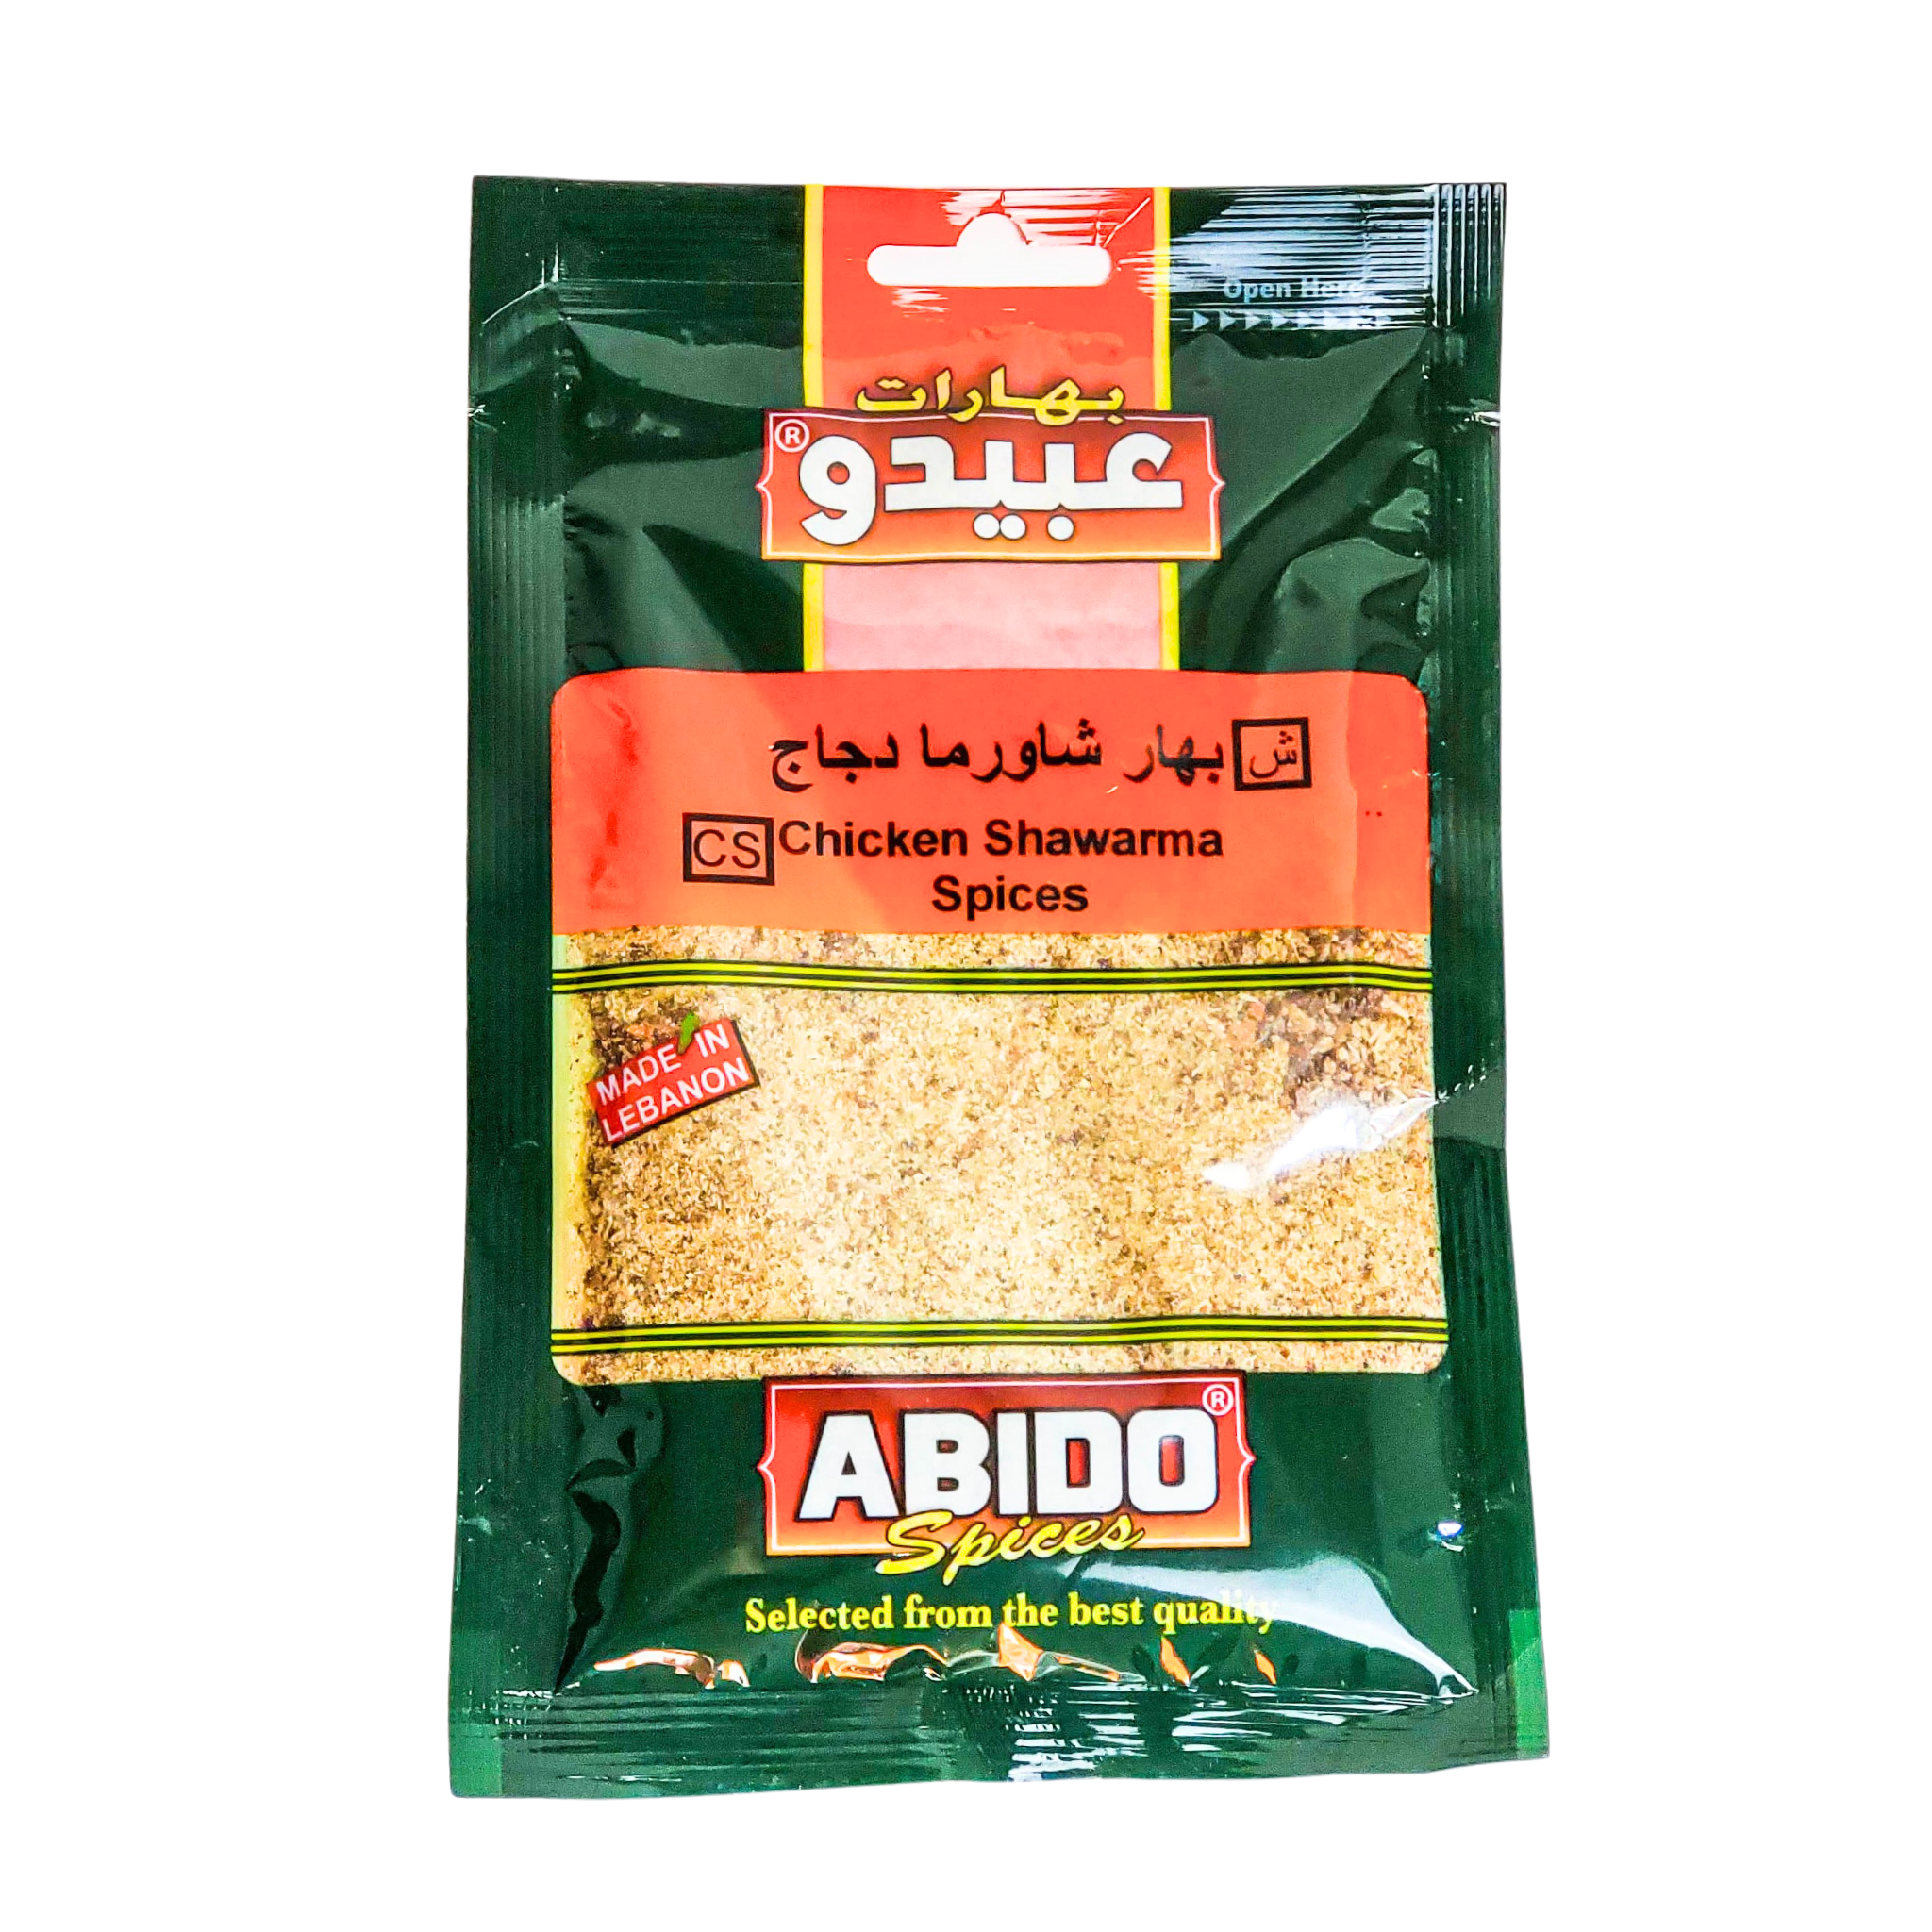 Abido Spices Chicken Shawarma Spices 100g